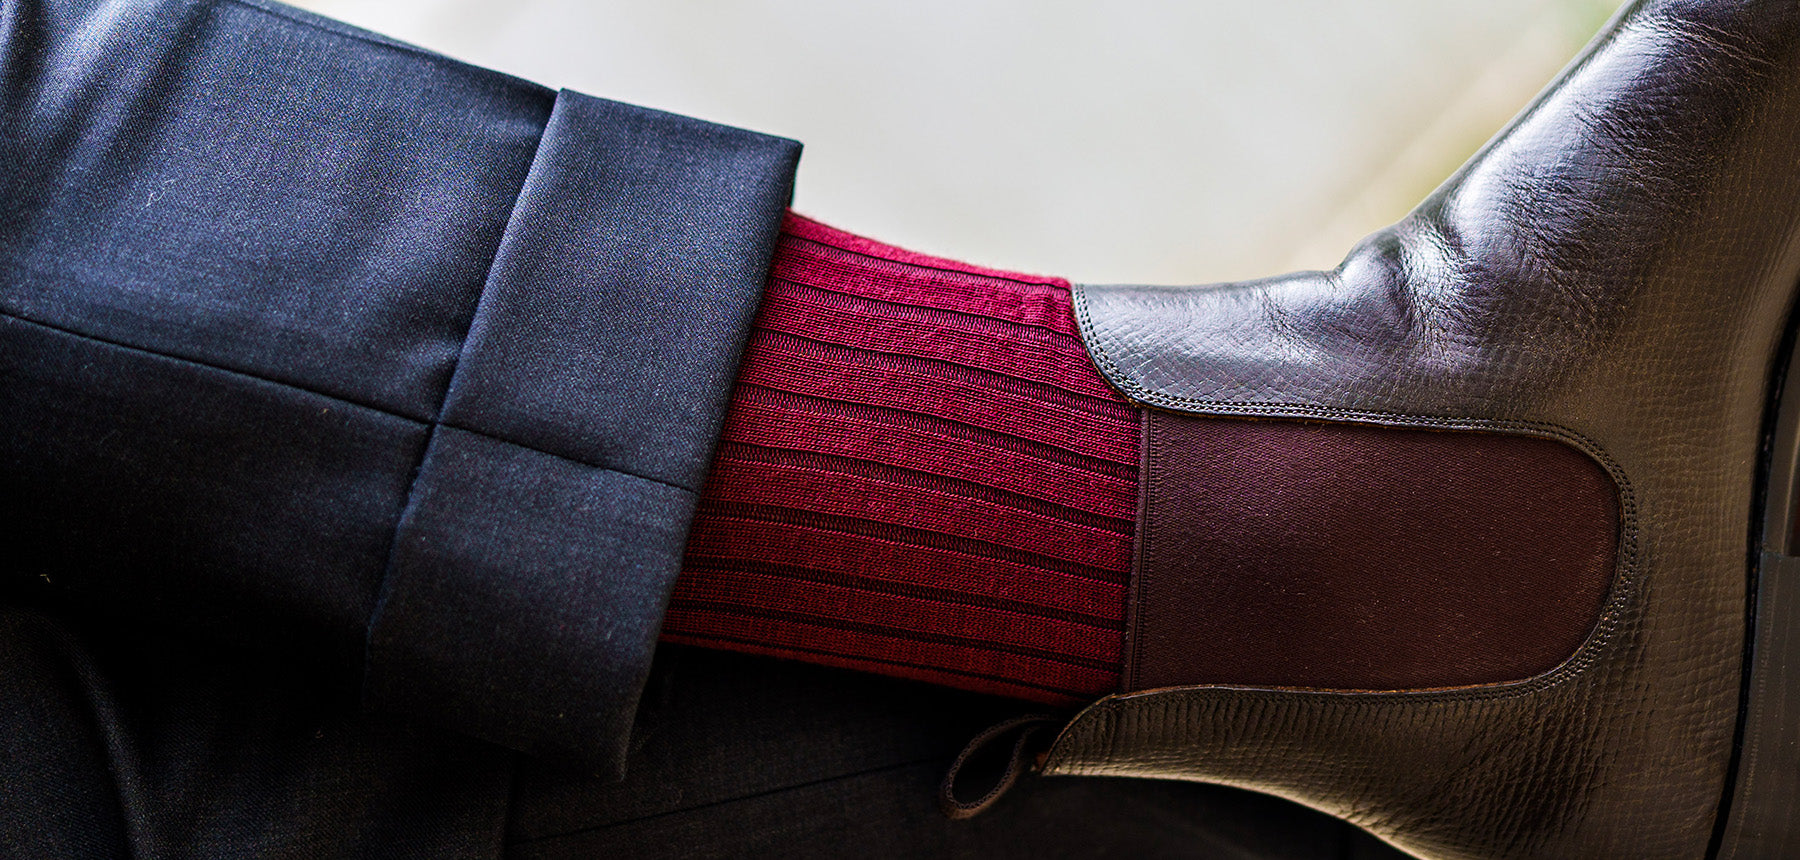 Choosing the Right Socks for Men's Chelsea Boots - Boardroom Socks